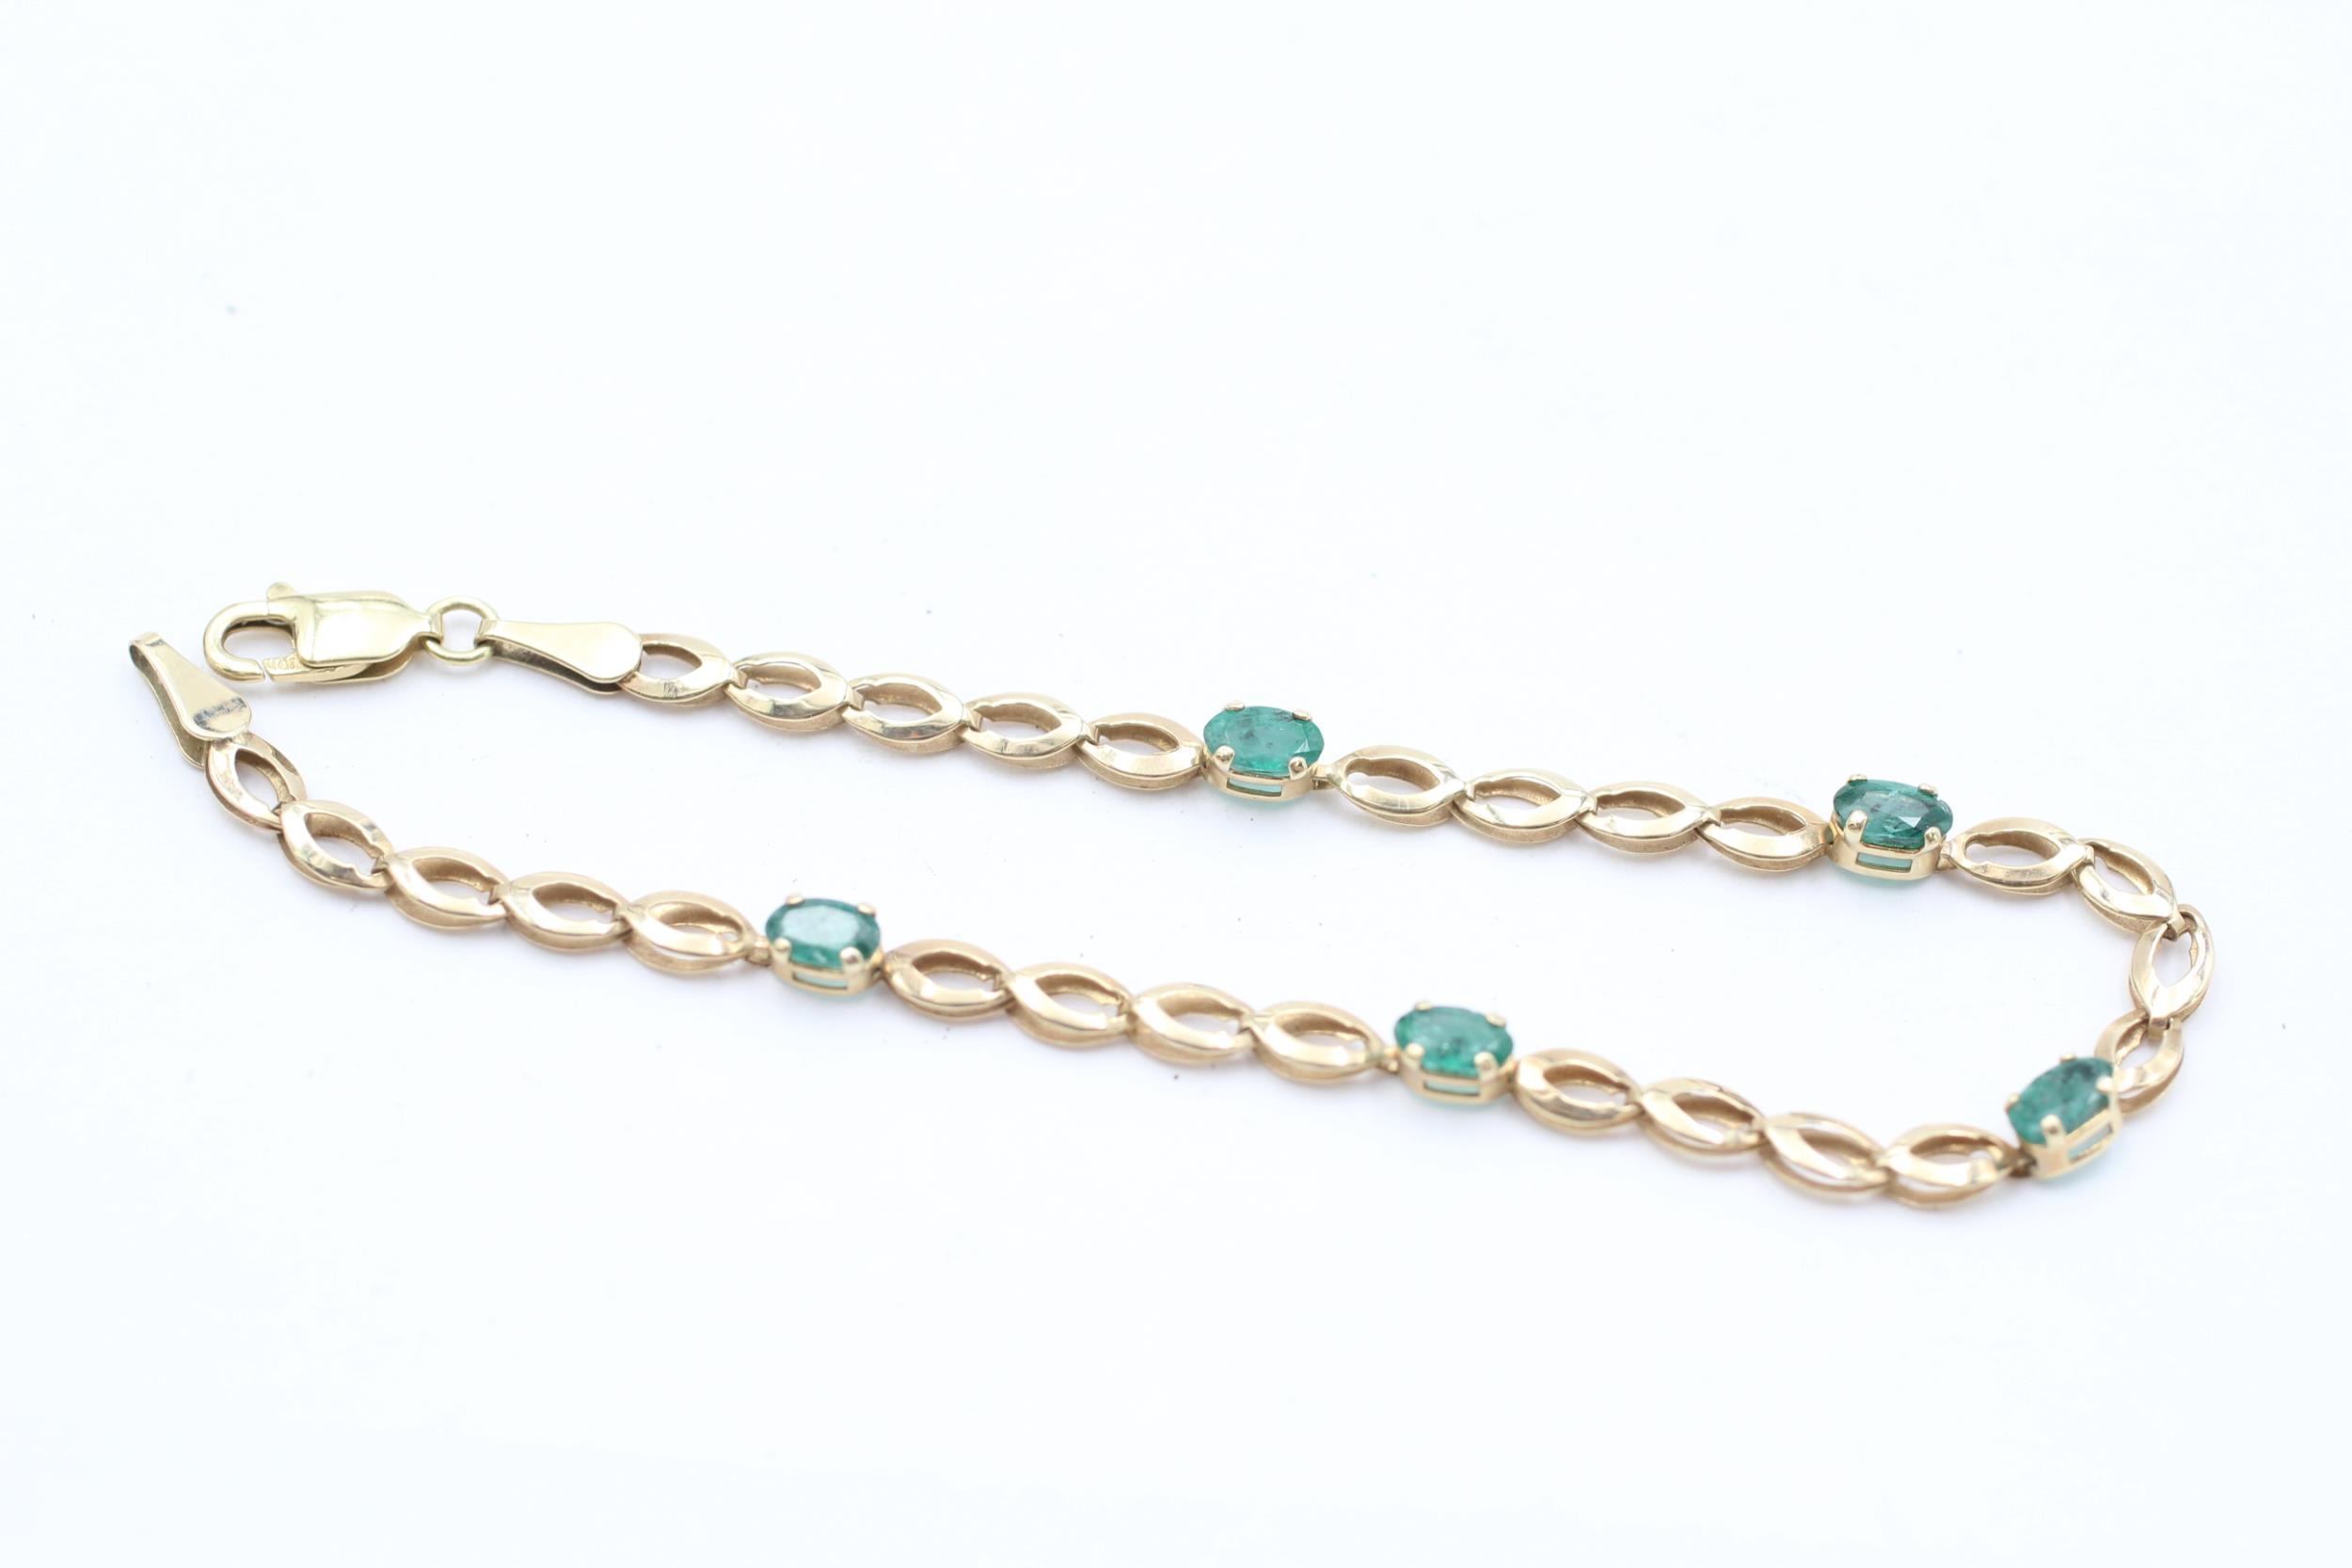 10ct gold emerald bracelet - 2.2 g